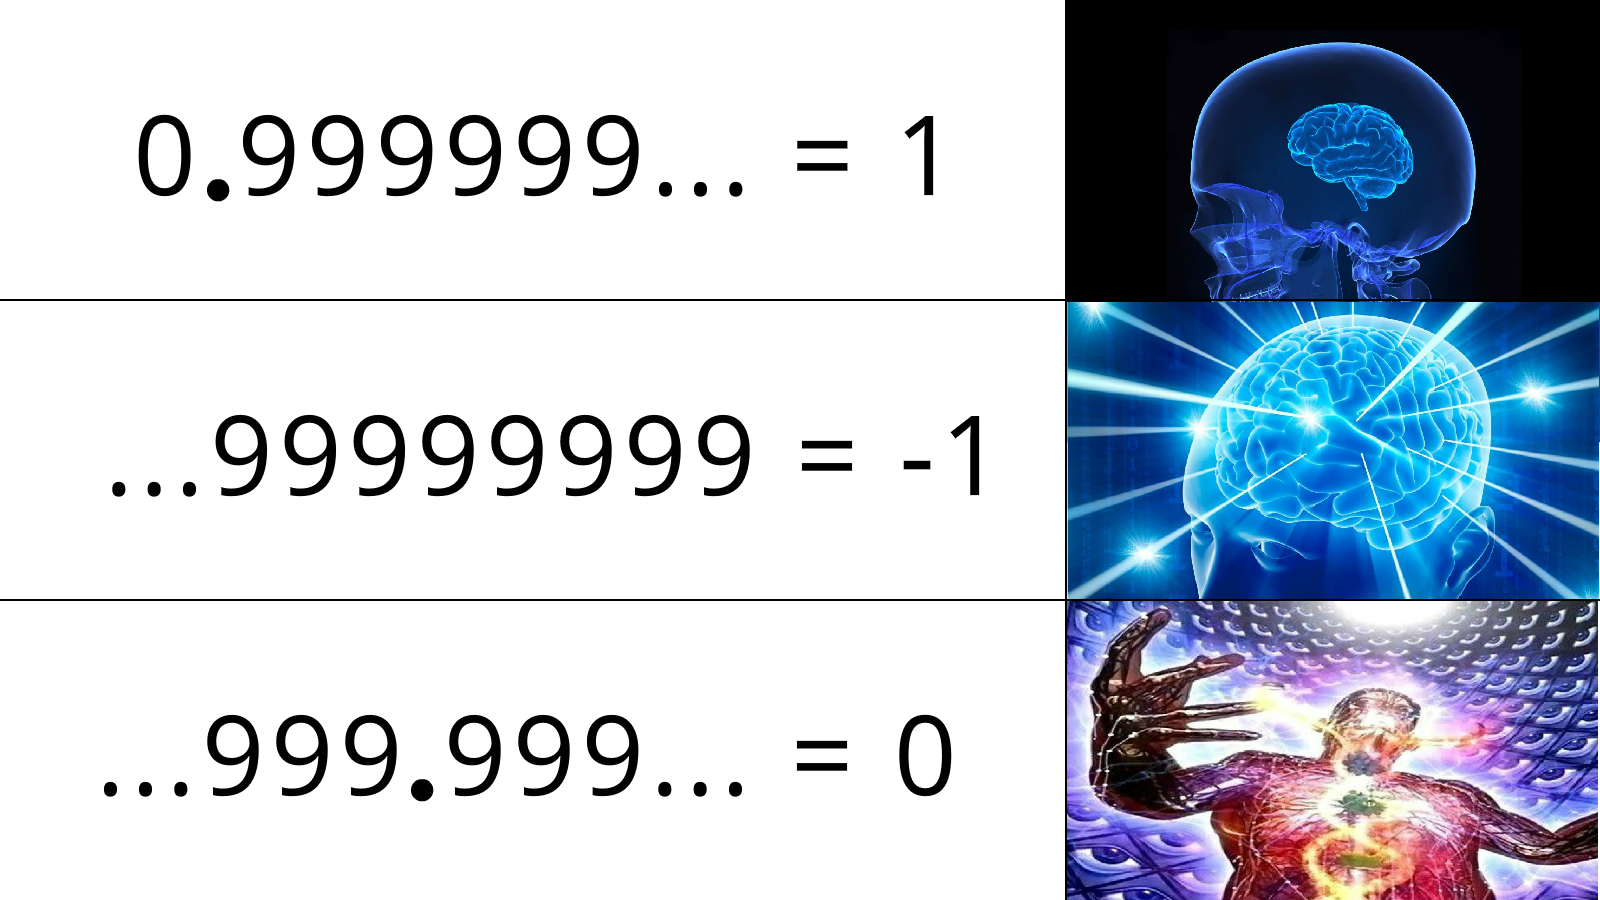 A "galaxy brain" meme. The small brain says 0.999... = 1. The big brain says ...999 = -1. The galaxy brain says ...999.999... = 0.